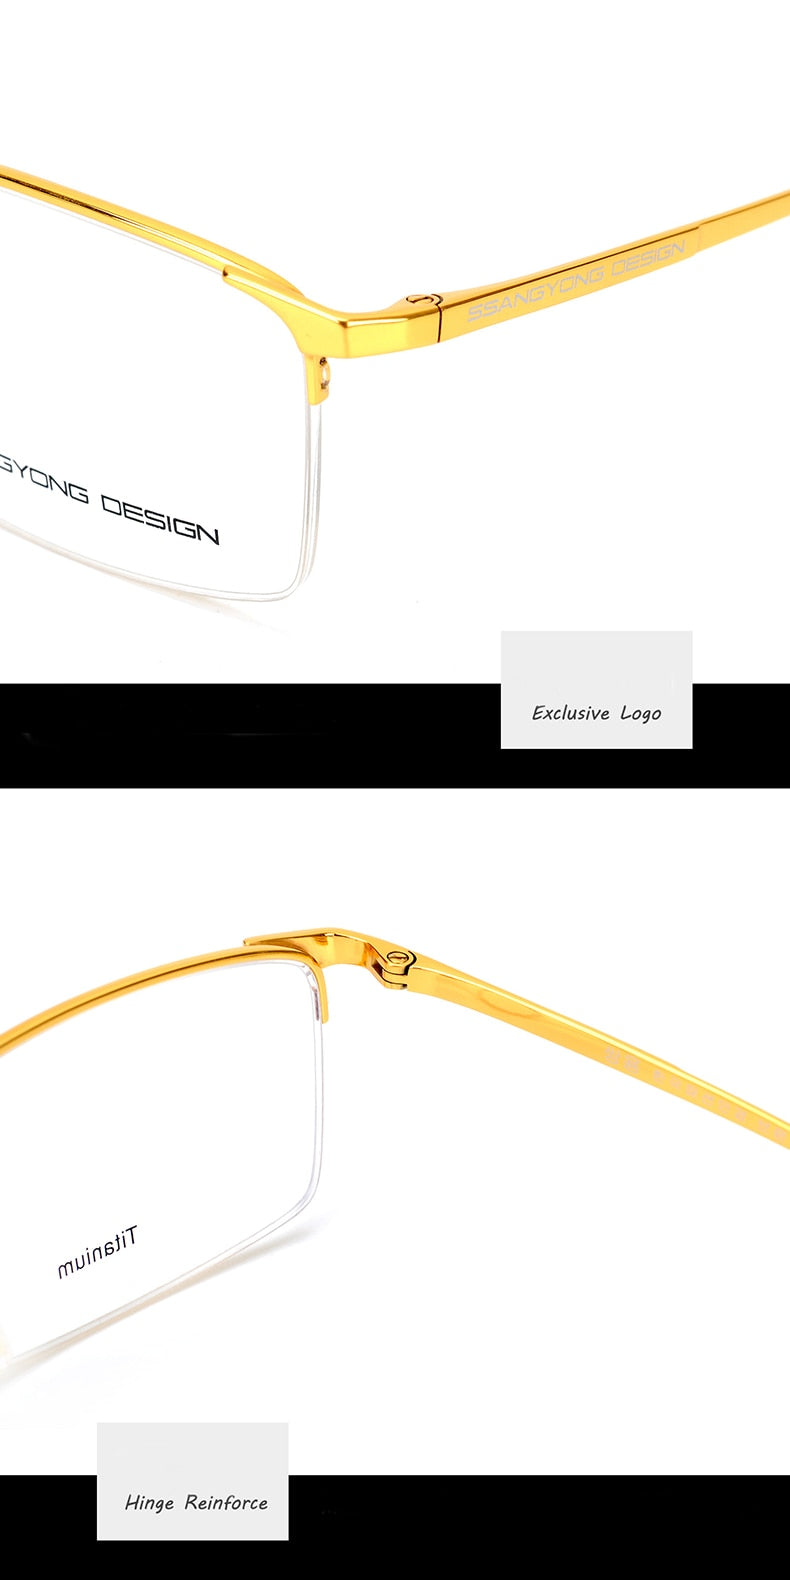 Hotony Men's Semi Rim Square Titanium Frame Eyeglasses S8803 Semi Rim Hotony   